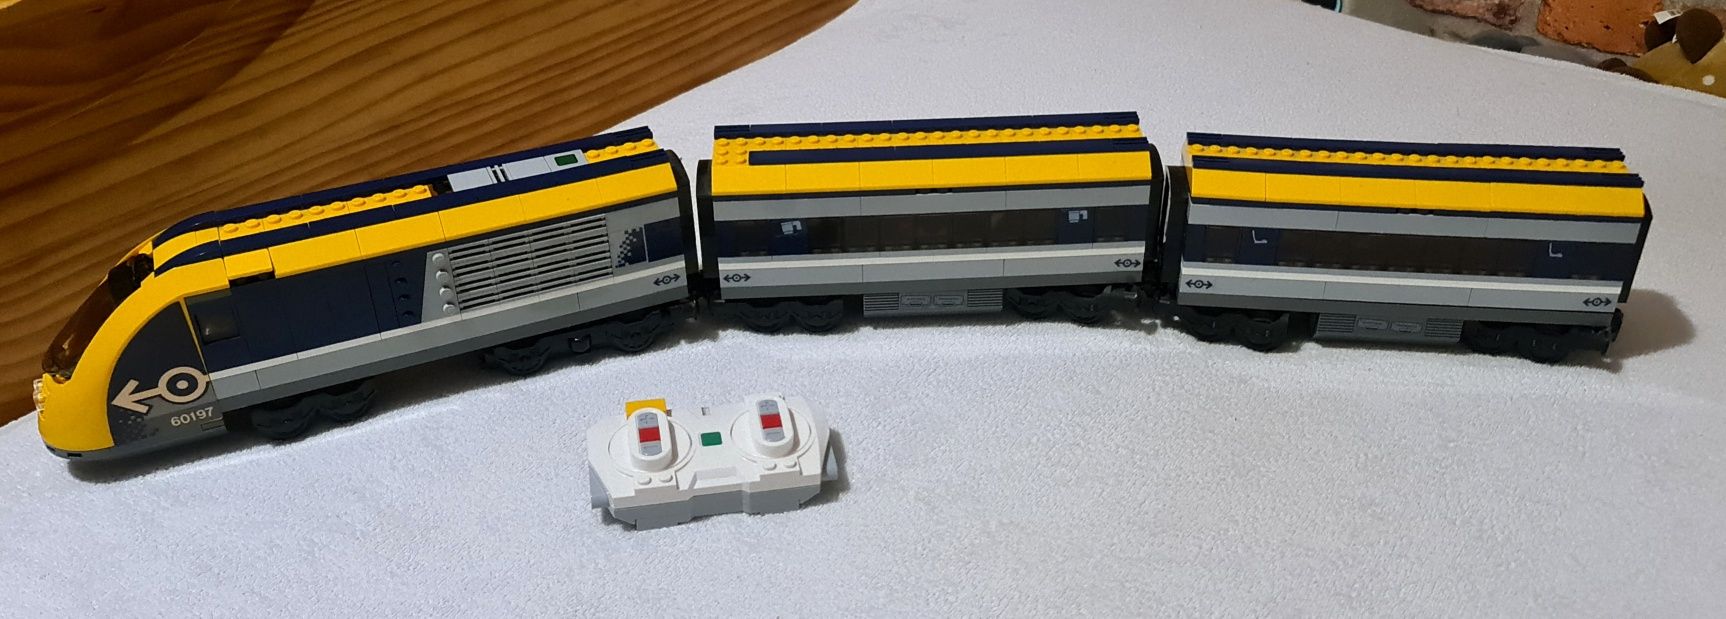 Lego city 60197 pociąg pasażerski.